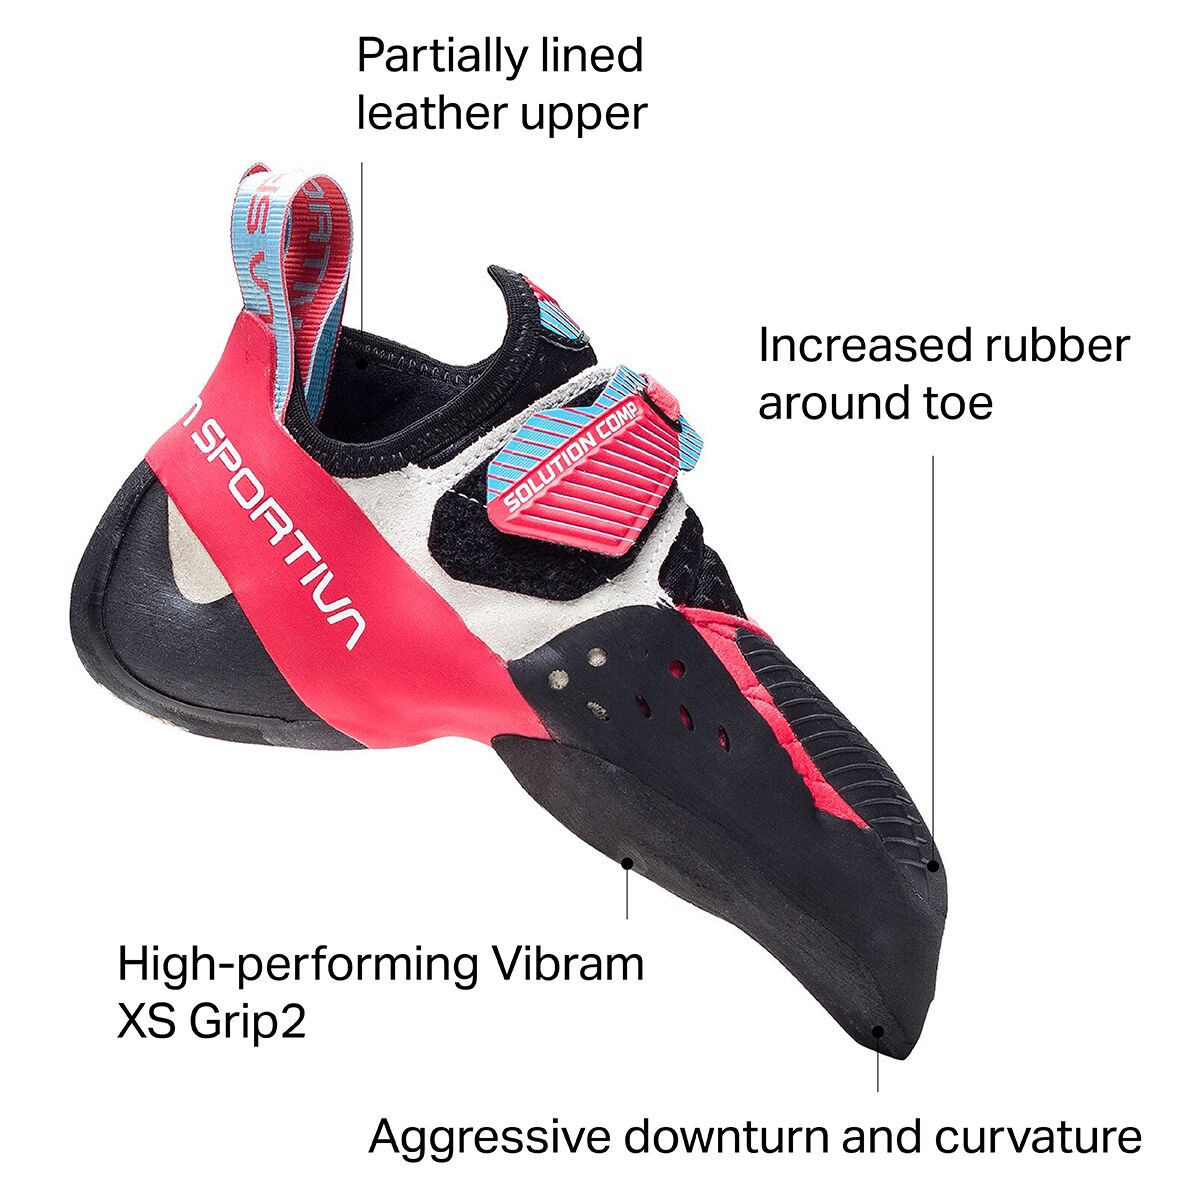 La Sportiva Solution Comp women's climbing shoes review